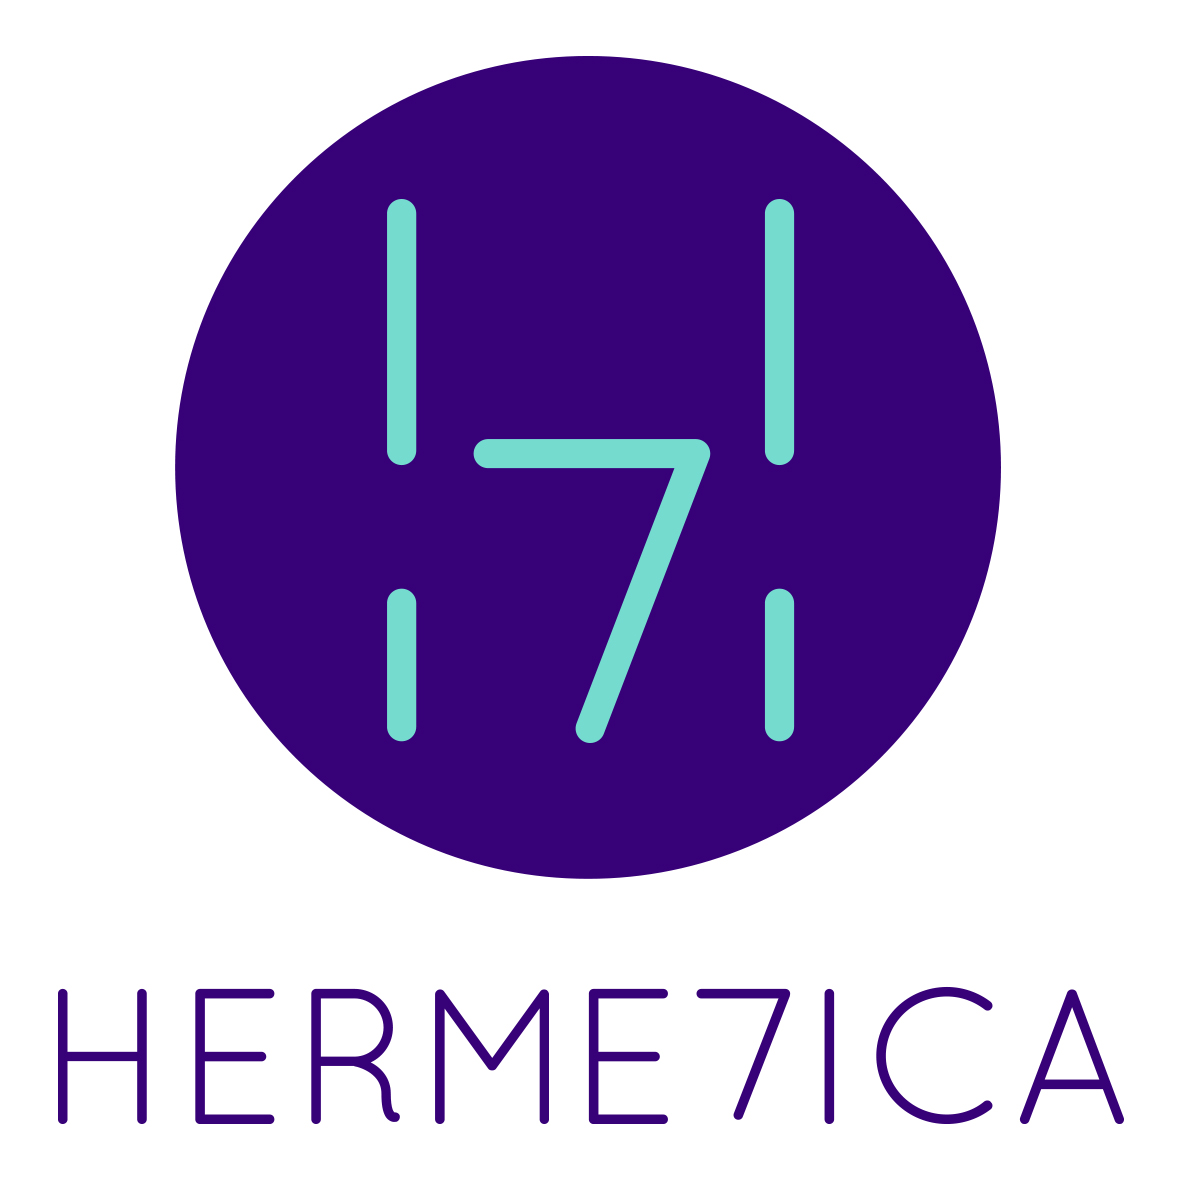 Hermetica